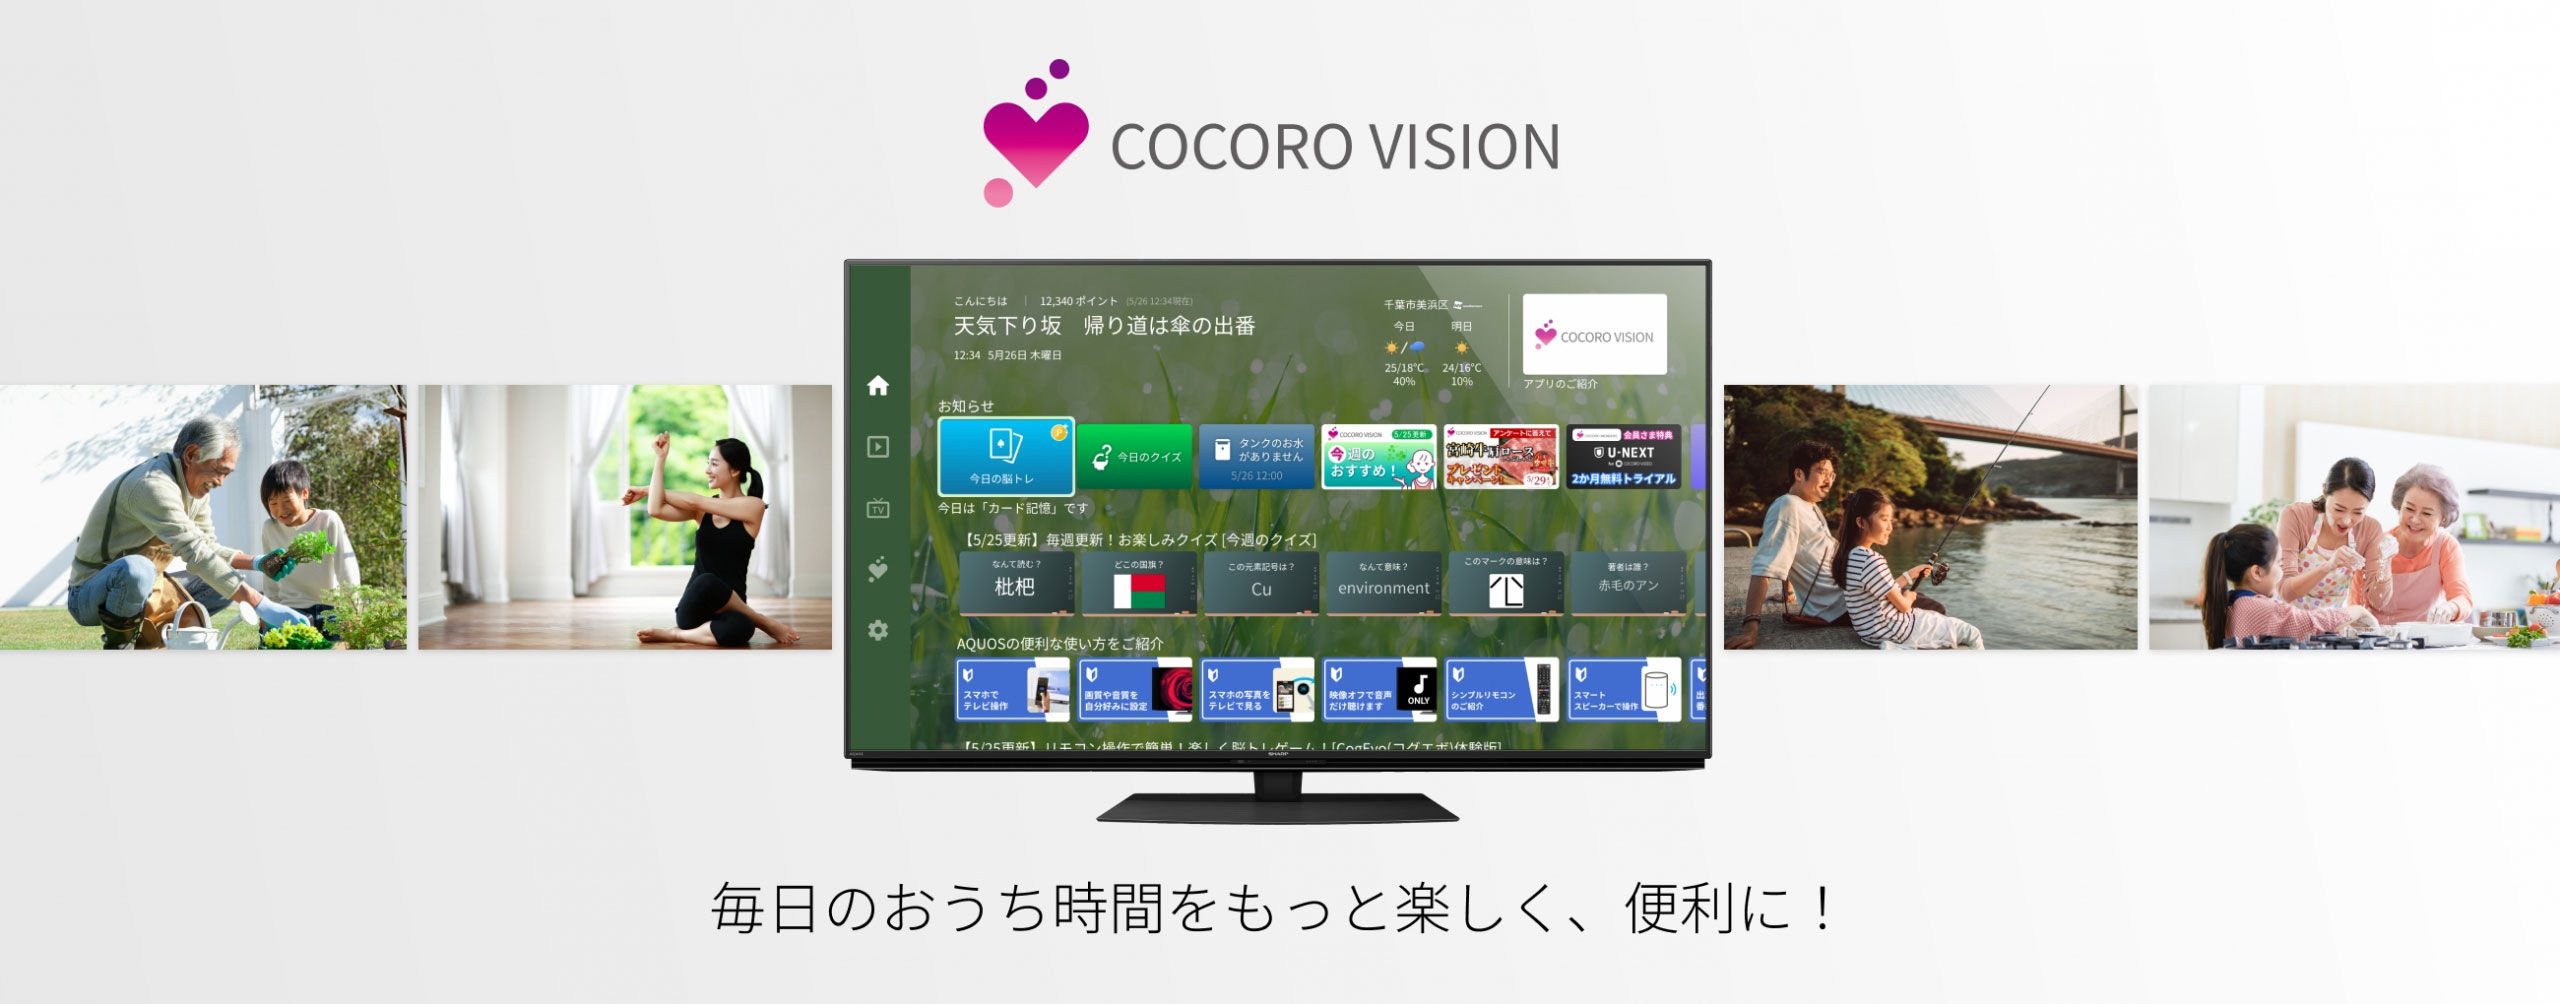 COCORO VISION AQUOS専用　エンタメ・生活情報サポートアプリ